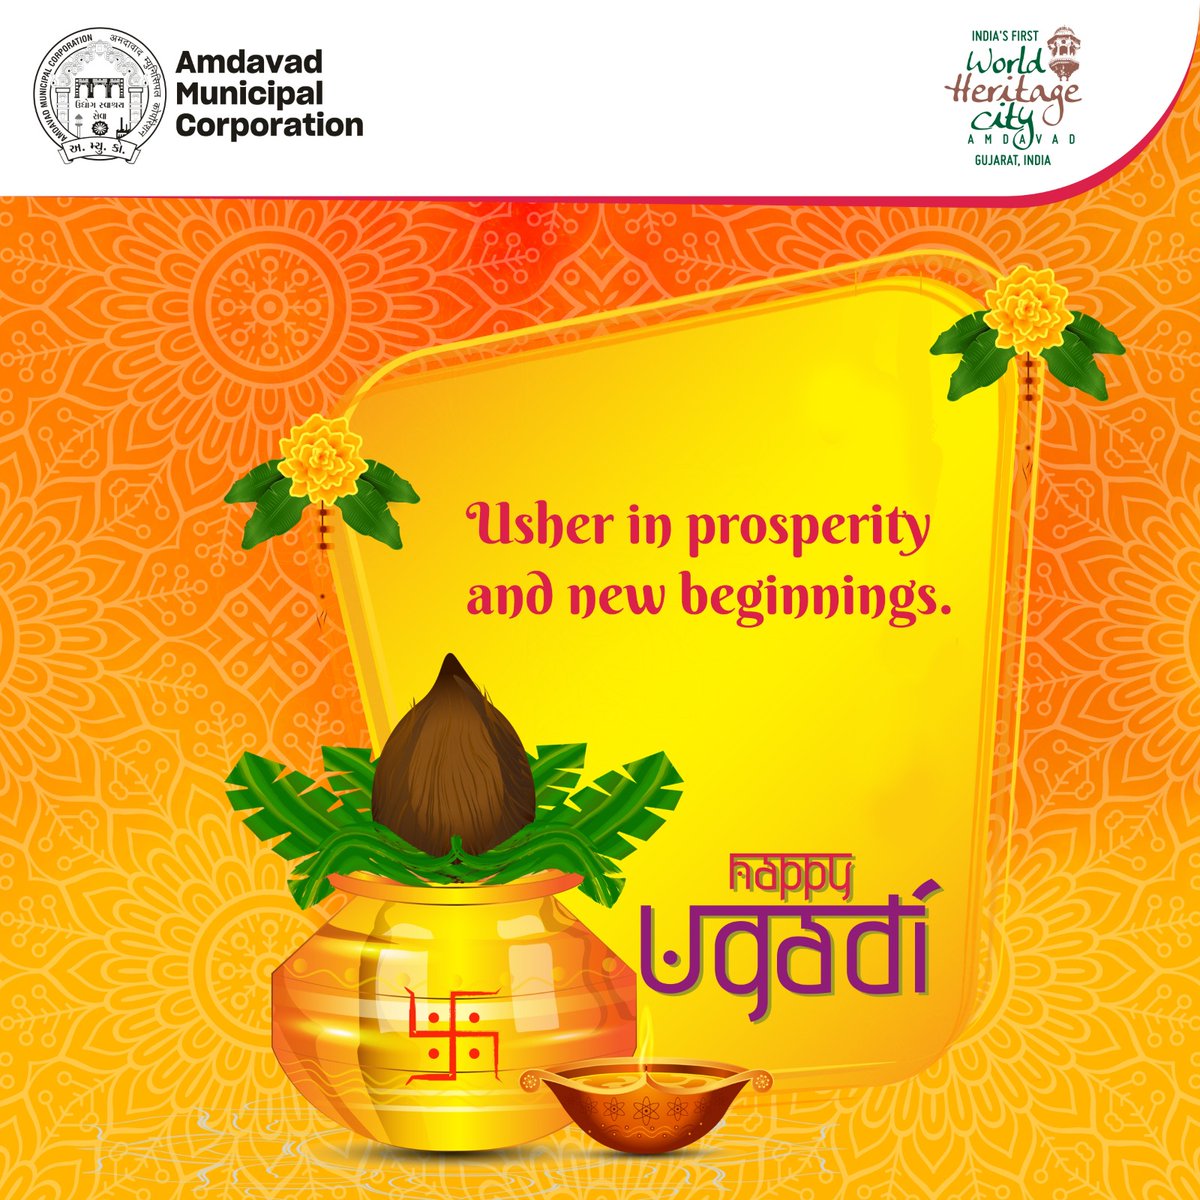 Wishing all a very Happy Ugadi!

#amc #amcforpeople #HappyUgadi #ahmedabad #municipalcorporation